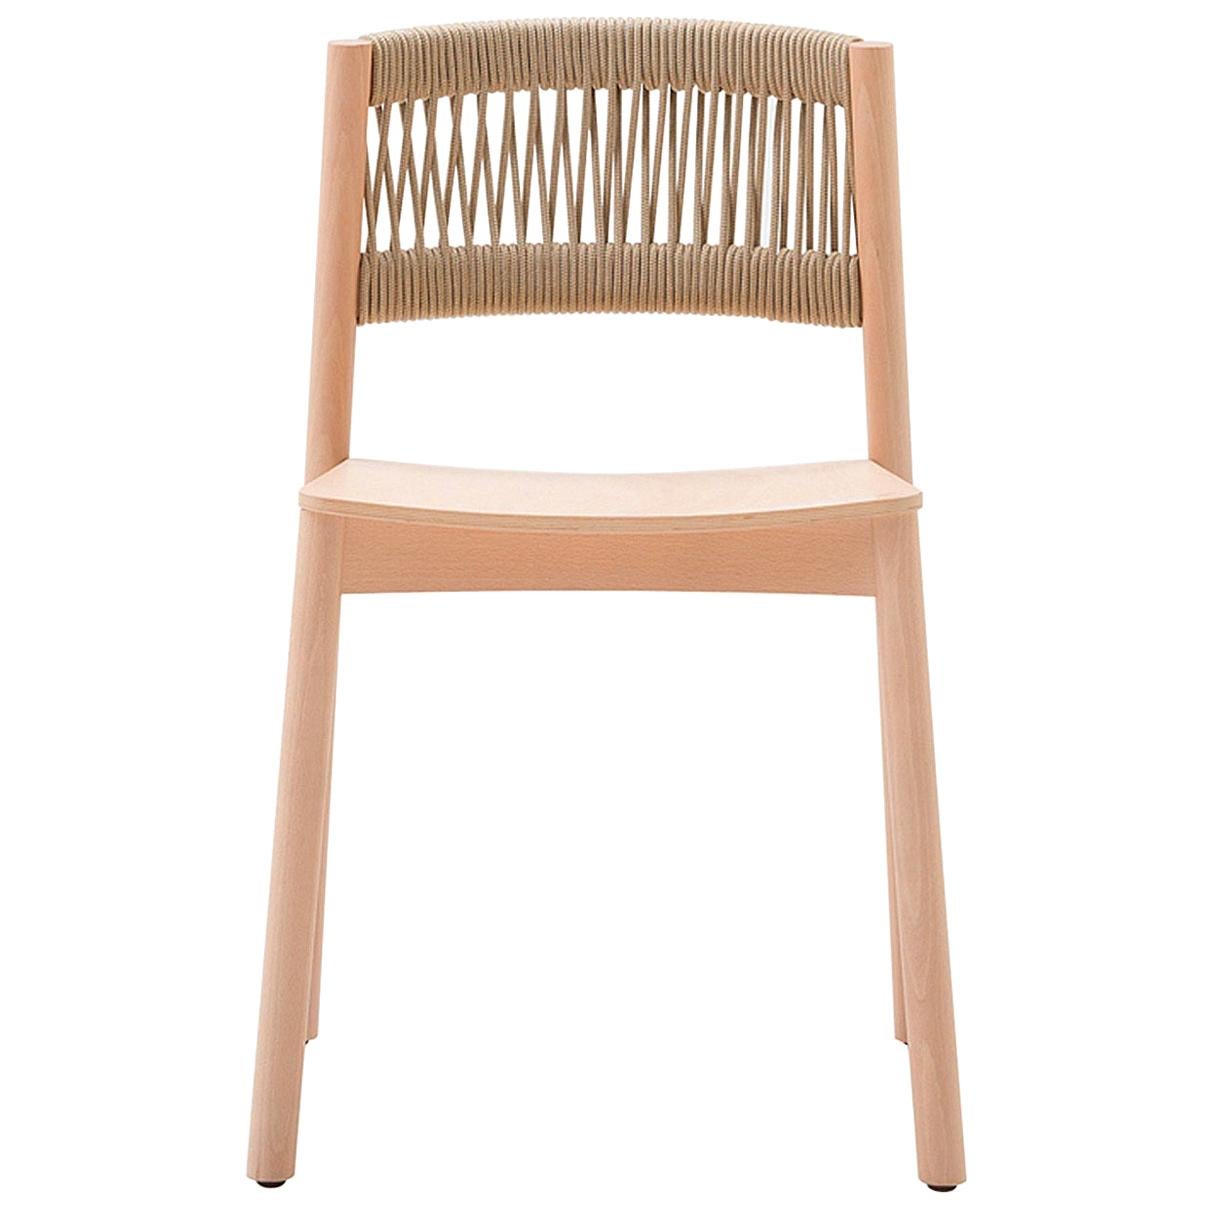 Load Chair by Emilio Nanni